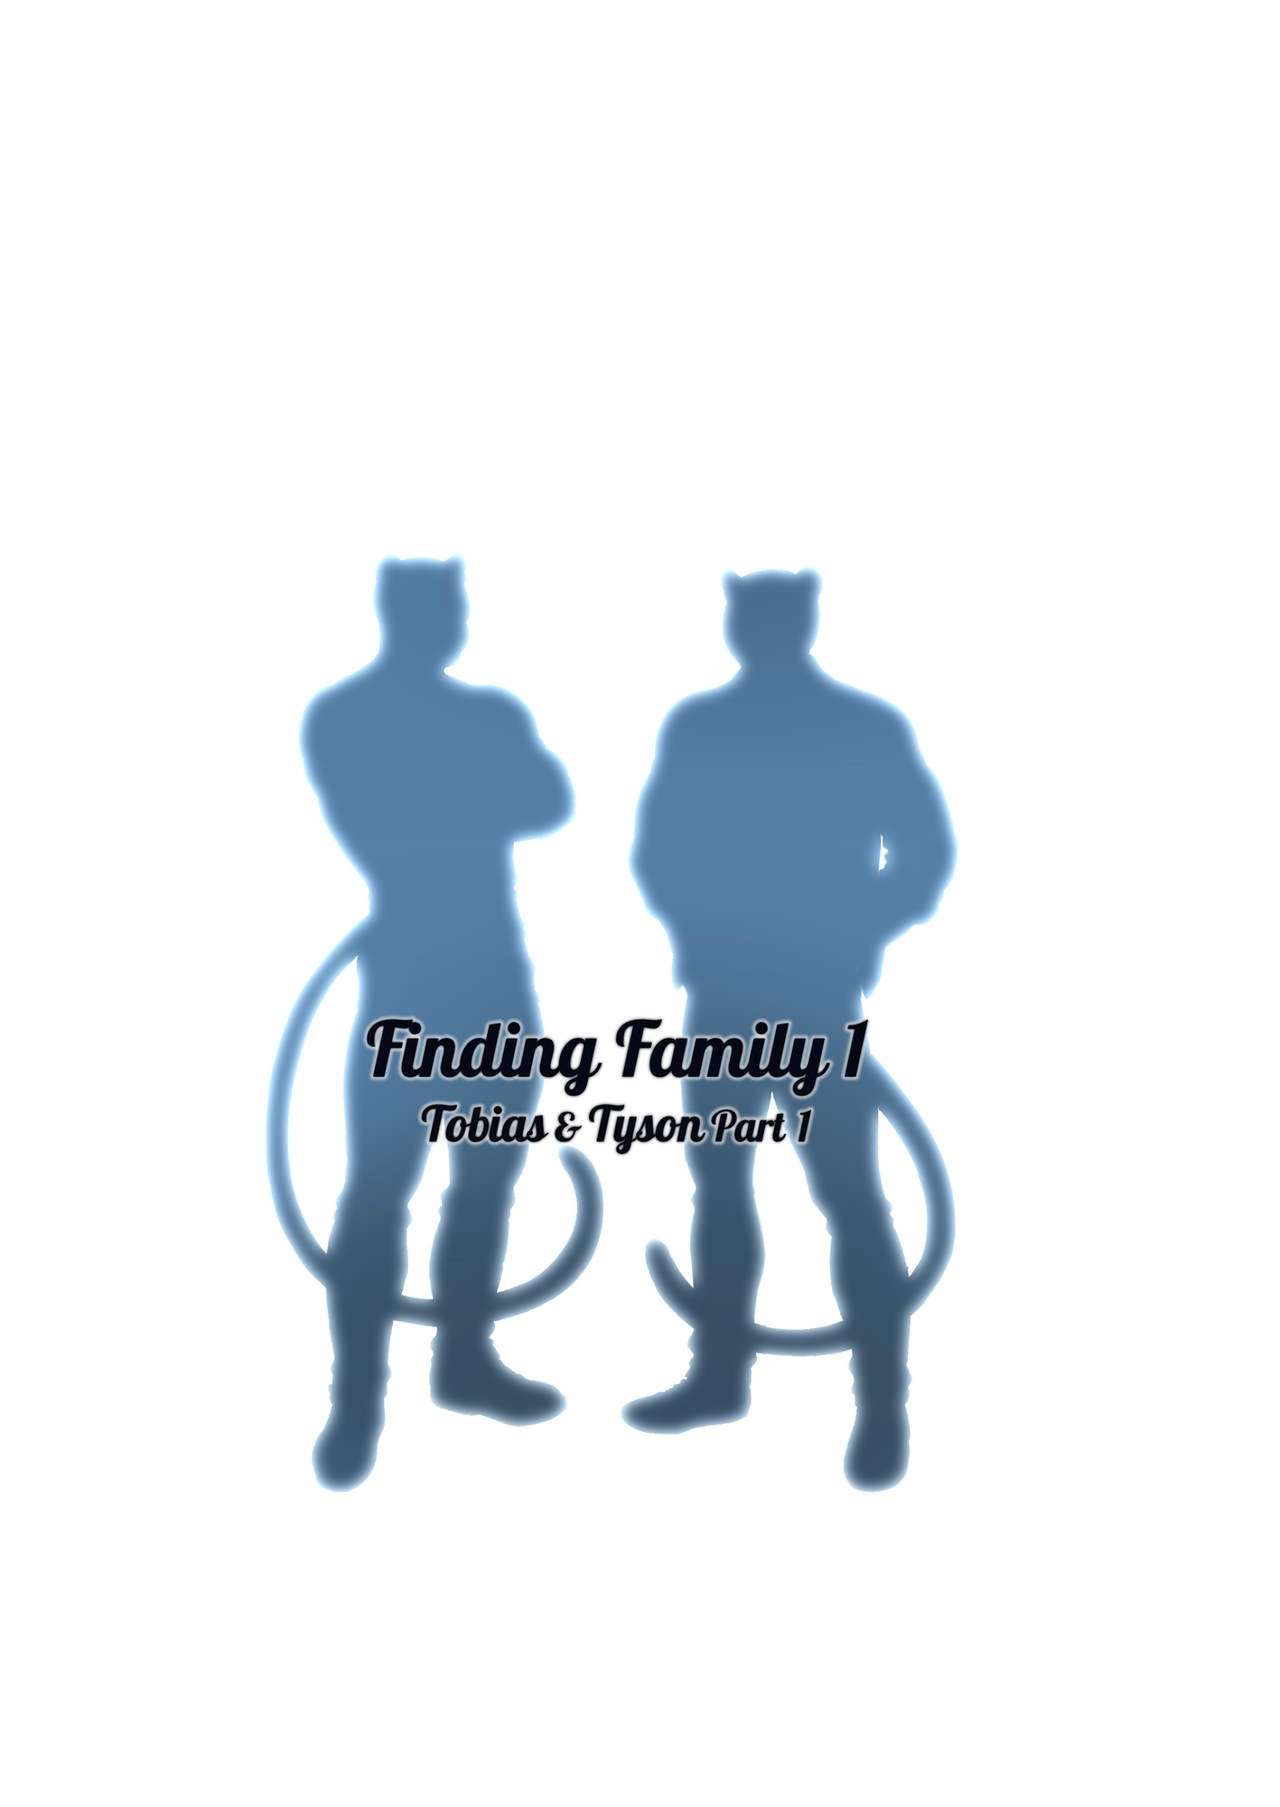 [Maririn] Finding Family (Ongoing) [同文城] [Chinese] [Maririn] Finding Family (Ongoing) [同文城] [Chinese]